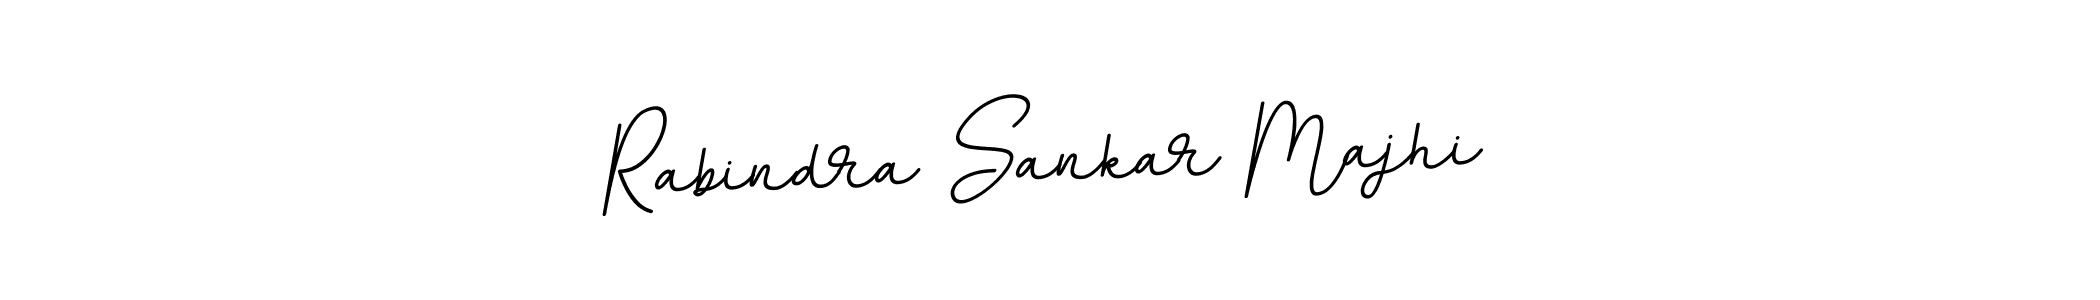 How to Draw Rabindra Sankar Majhi signature style? BallpointsItalic-DORy9 is a latest design signature styles for name Rabindra Sankar Majhi. Rabindra Sankar Majhi signature style 11 images and pictures png